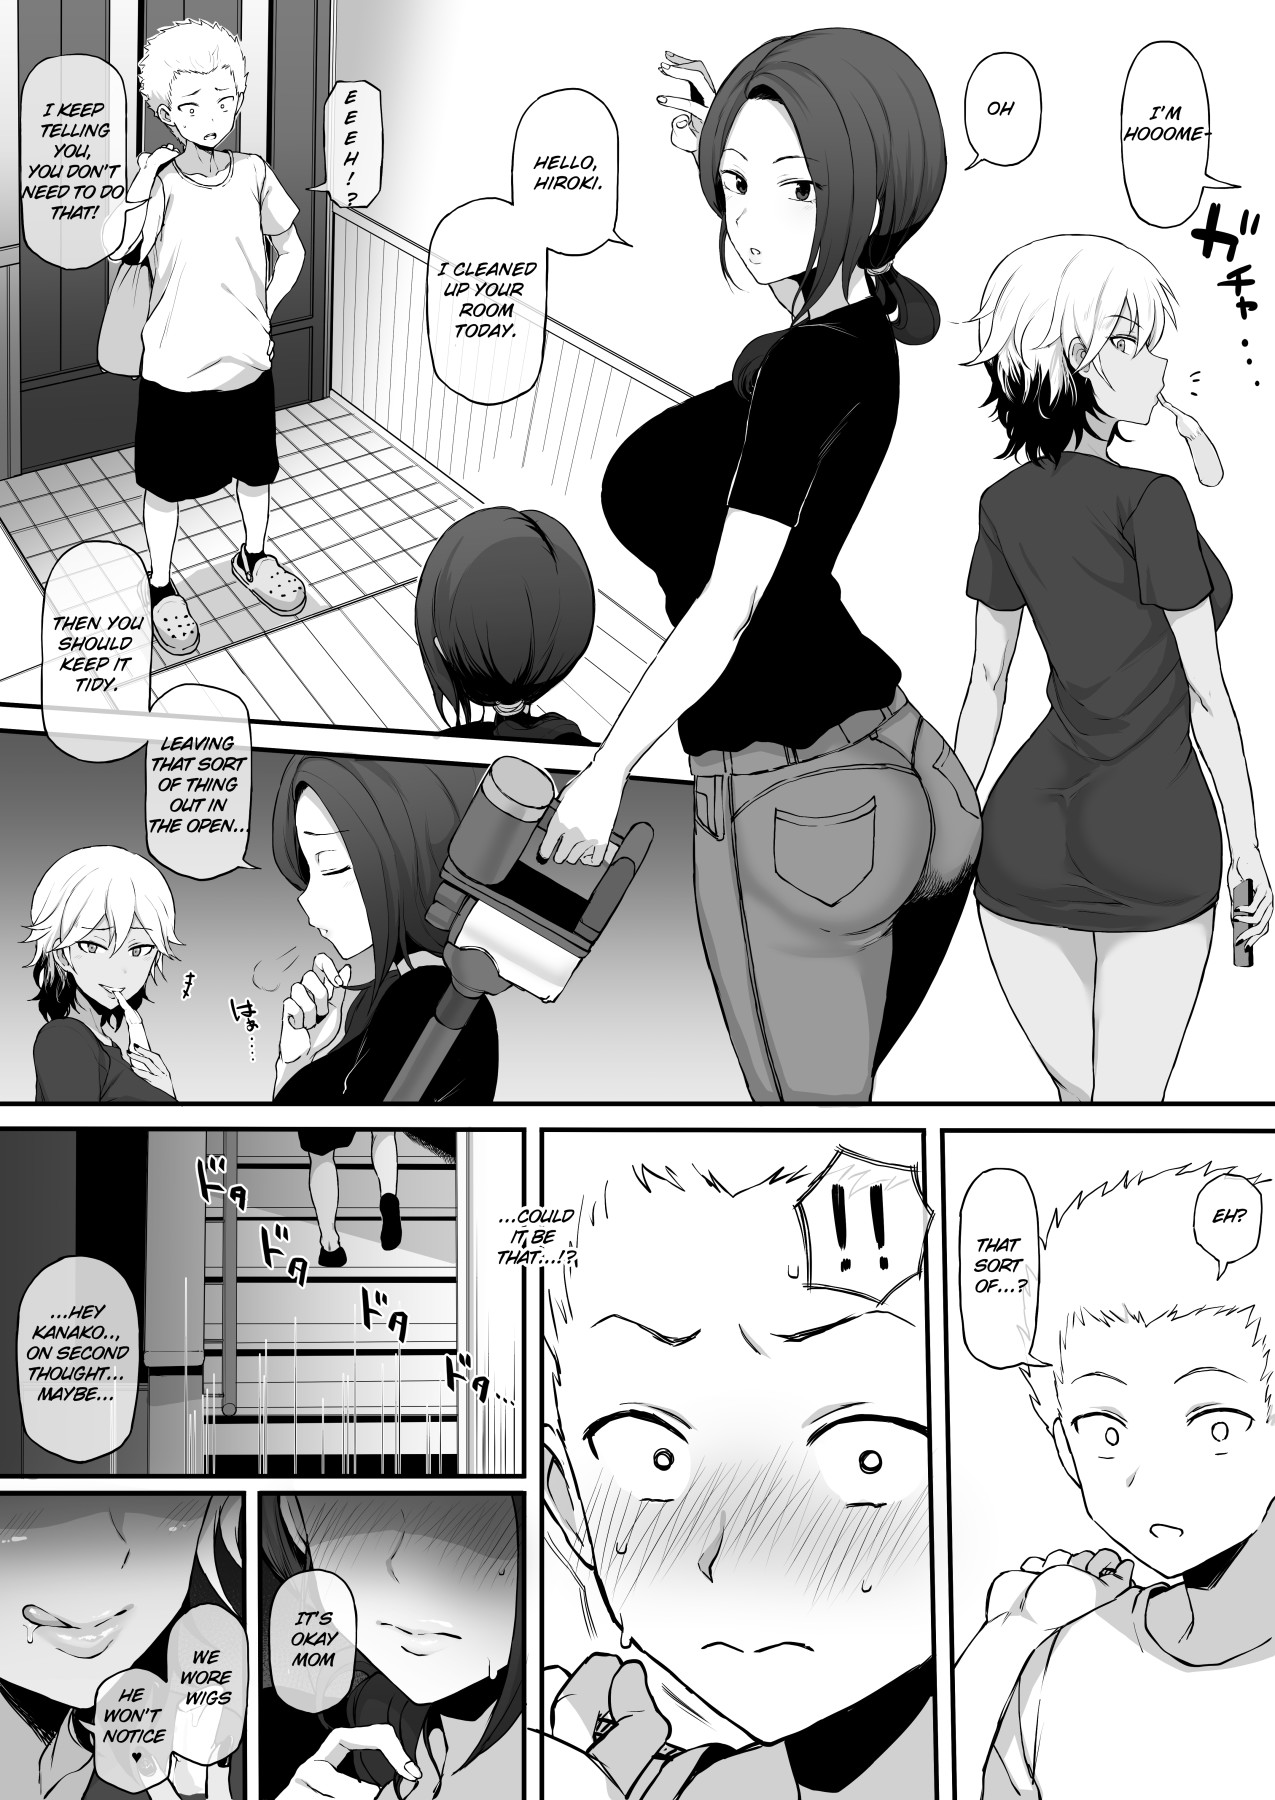 Hentai Manga Comic-Doing NTR With The Black Transfer Student - Black DVD-Read-1